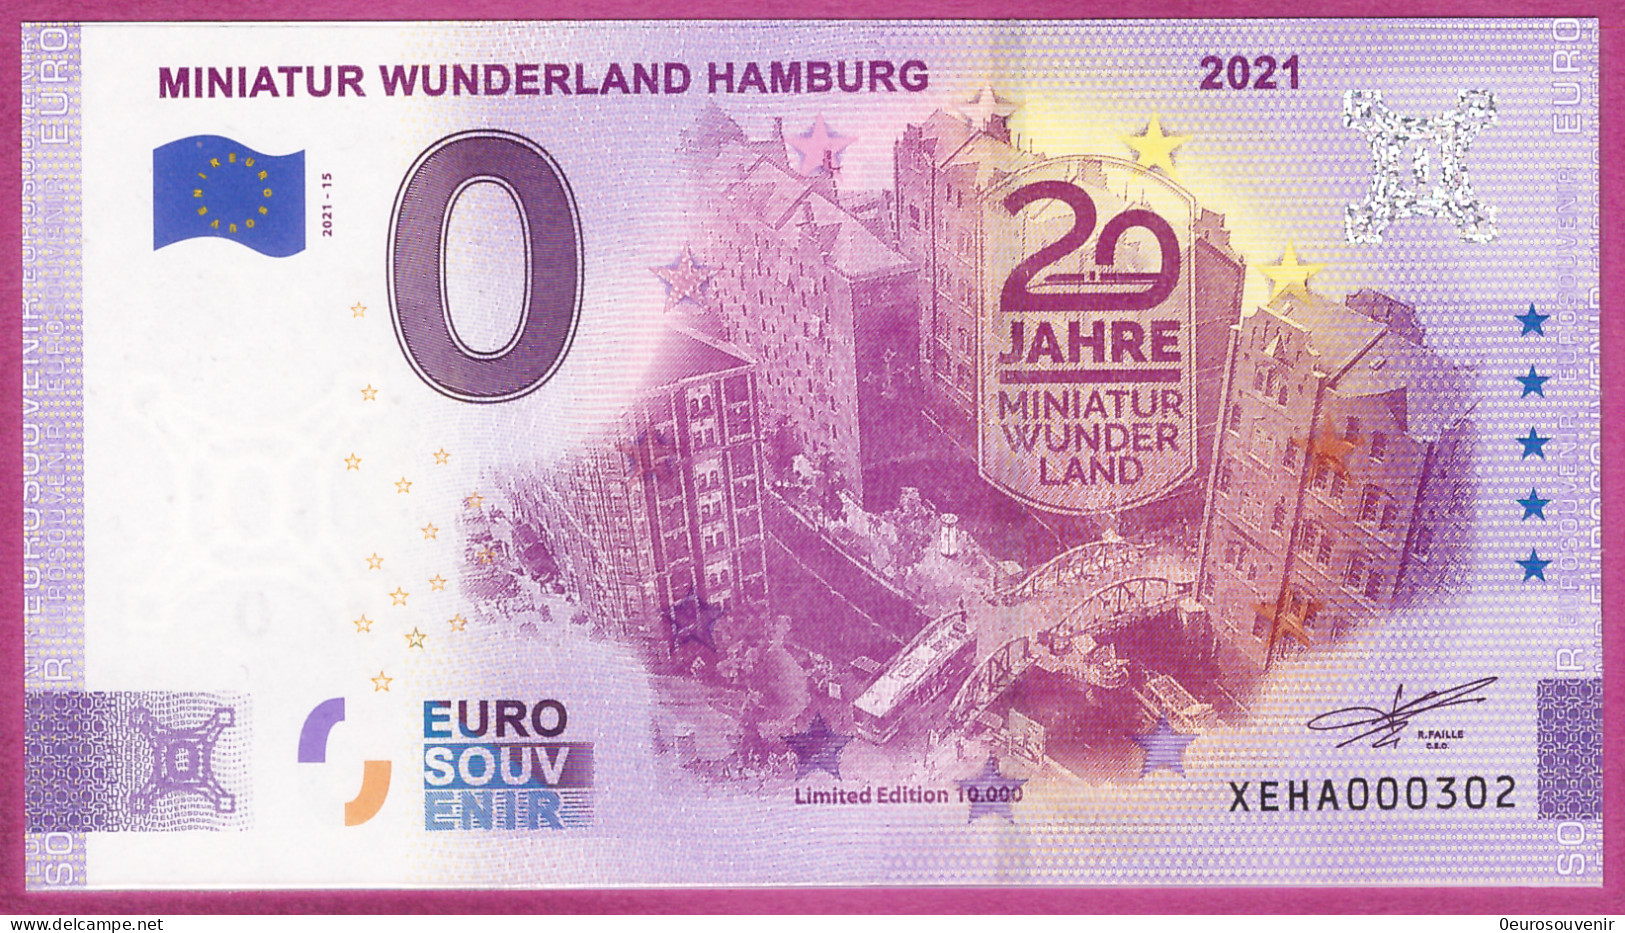 0-Euro XEHA 2021-15 MINIATUR WUNDERLAND HAMBURG - 20 JAHRE 2021 - Essais Privés / Non-officiels